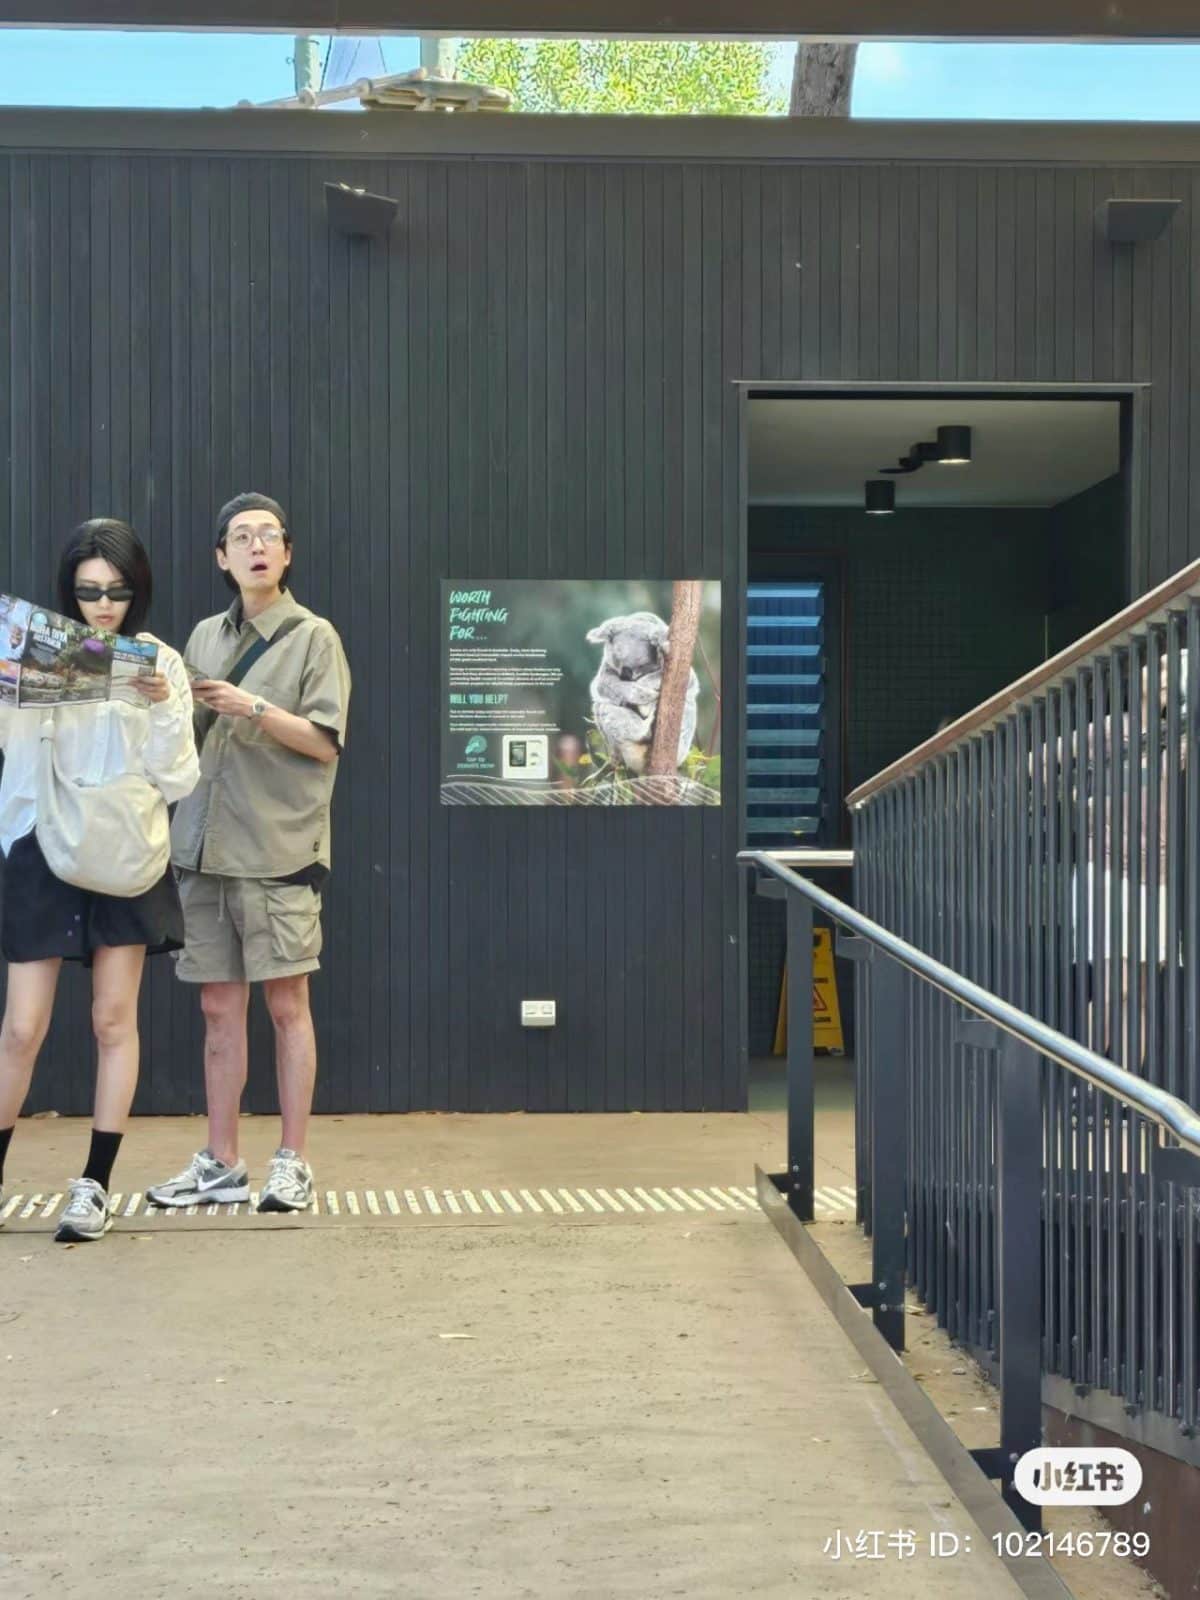 Суён и Чон Кён Хо замечены на свидании в зоопарке Сиднея